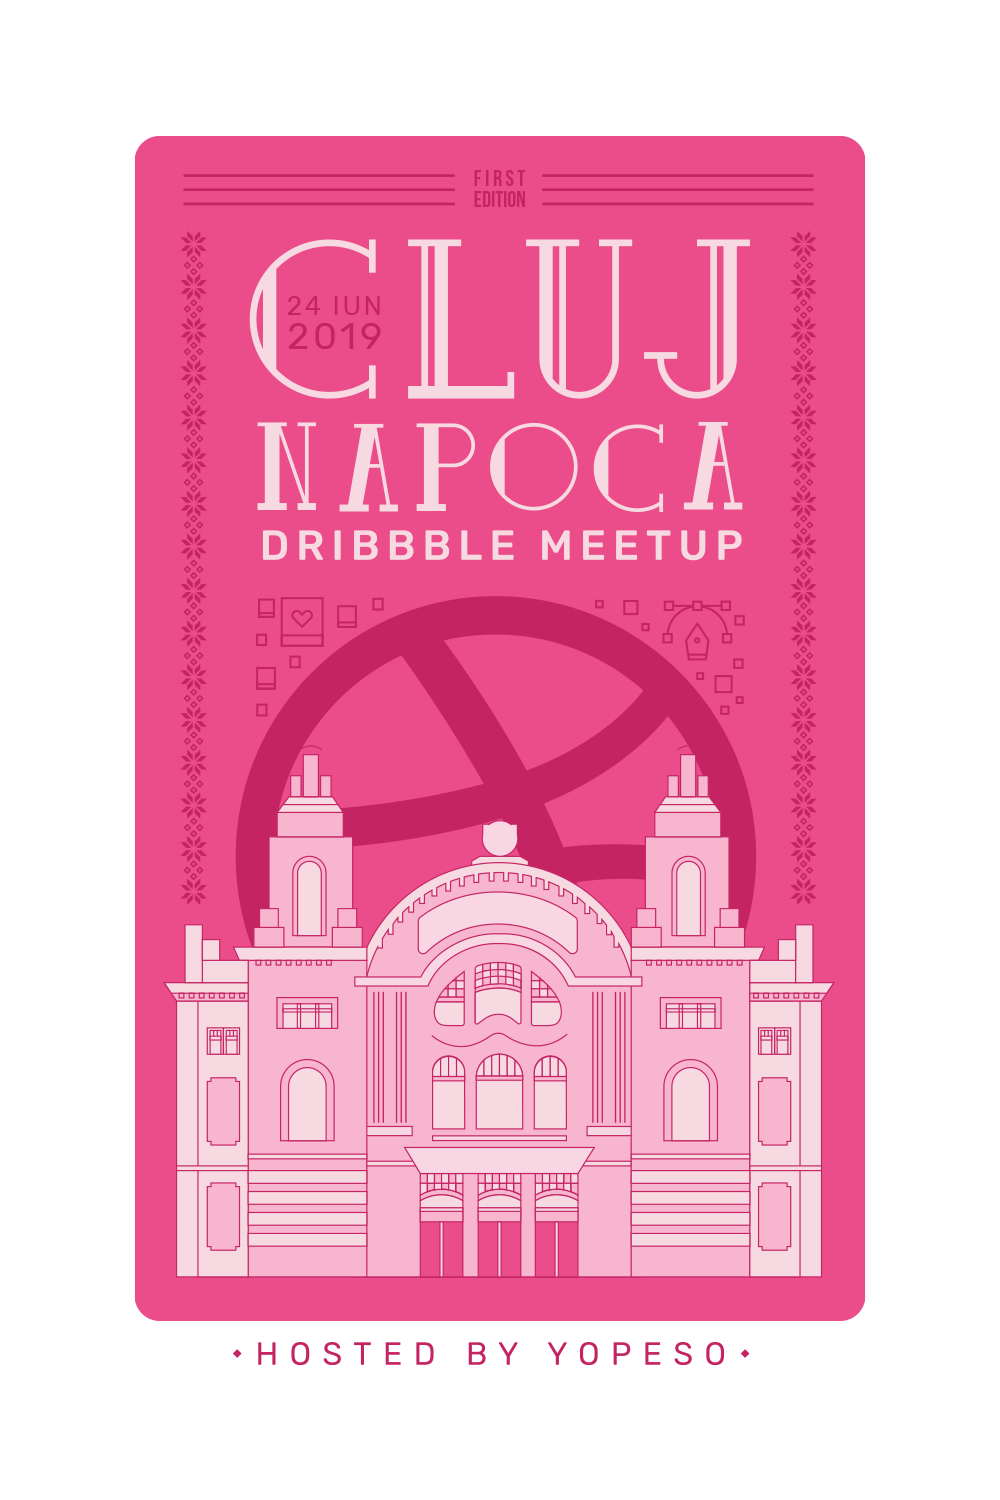 Cluj-Napoca Dribbble Meetup